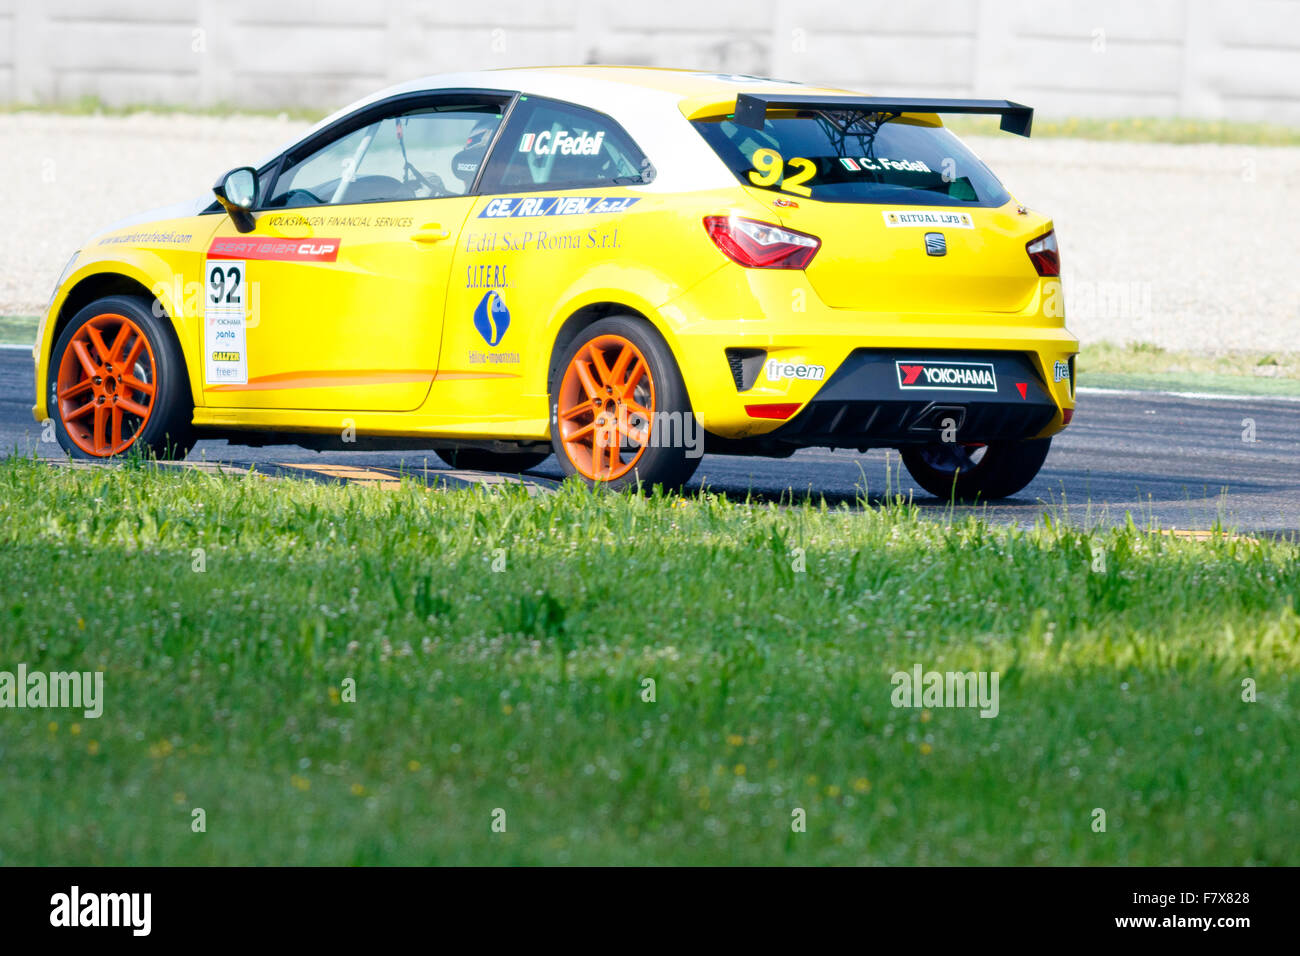 Monza, Italy - May 30, 2015: Seat Ibizia – Girasole Team, driven FEDELI Carlotta during the Seat Ibiza Cup Stock Photo